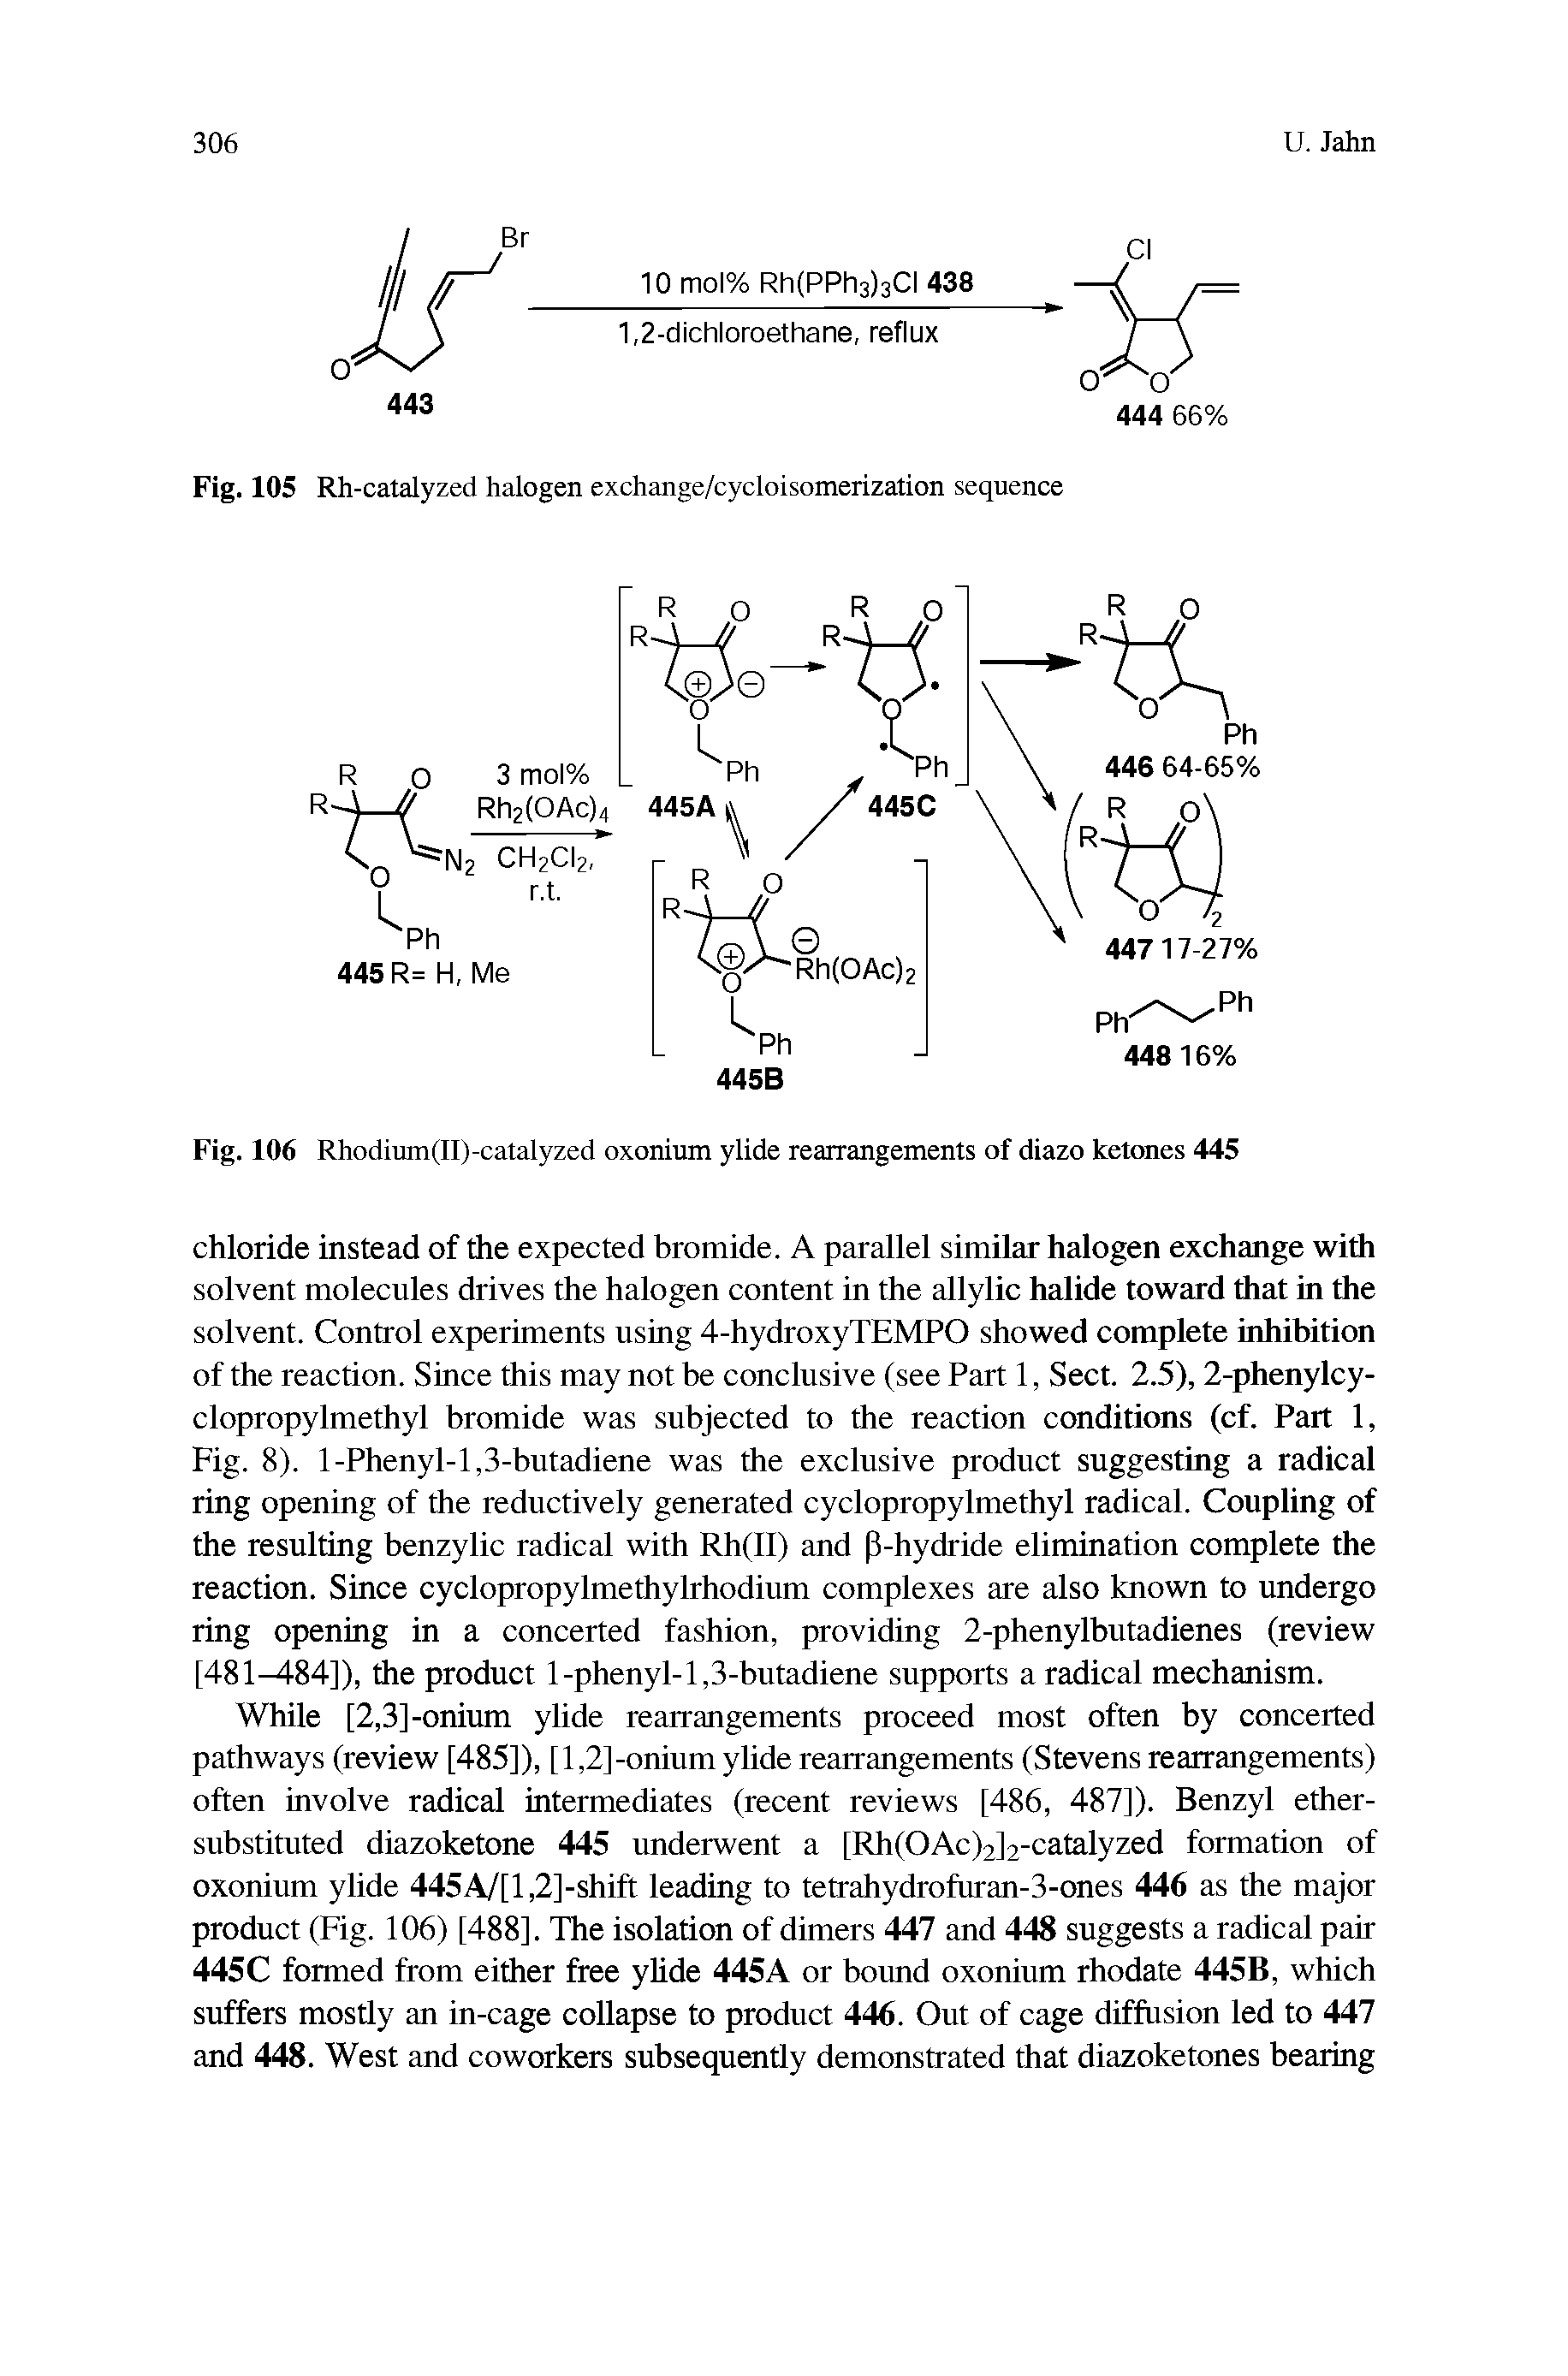 Fig. 106 Rhodium(II)-catalyzed oxonium ylide rearrangements of diazo ketones 445...